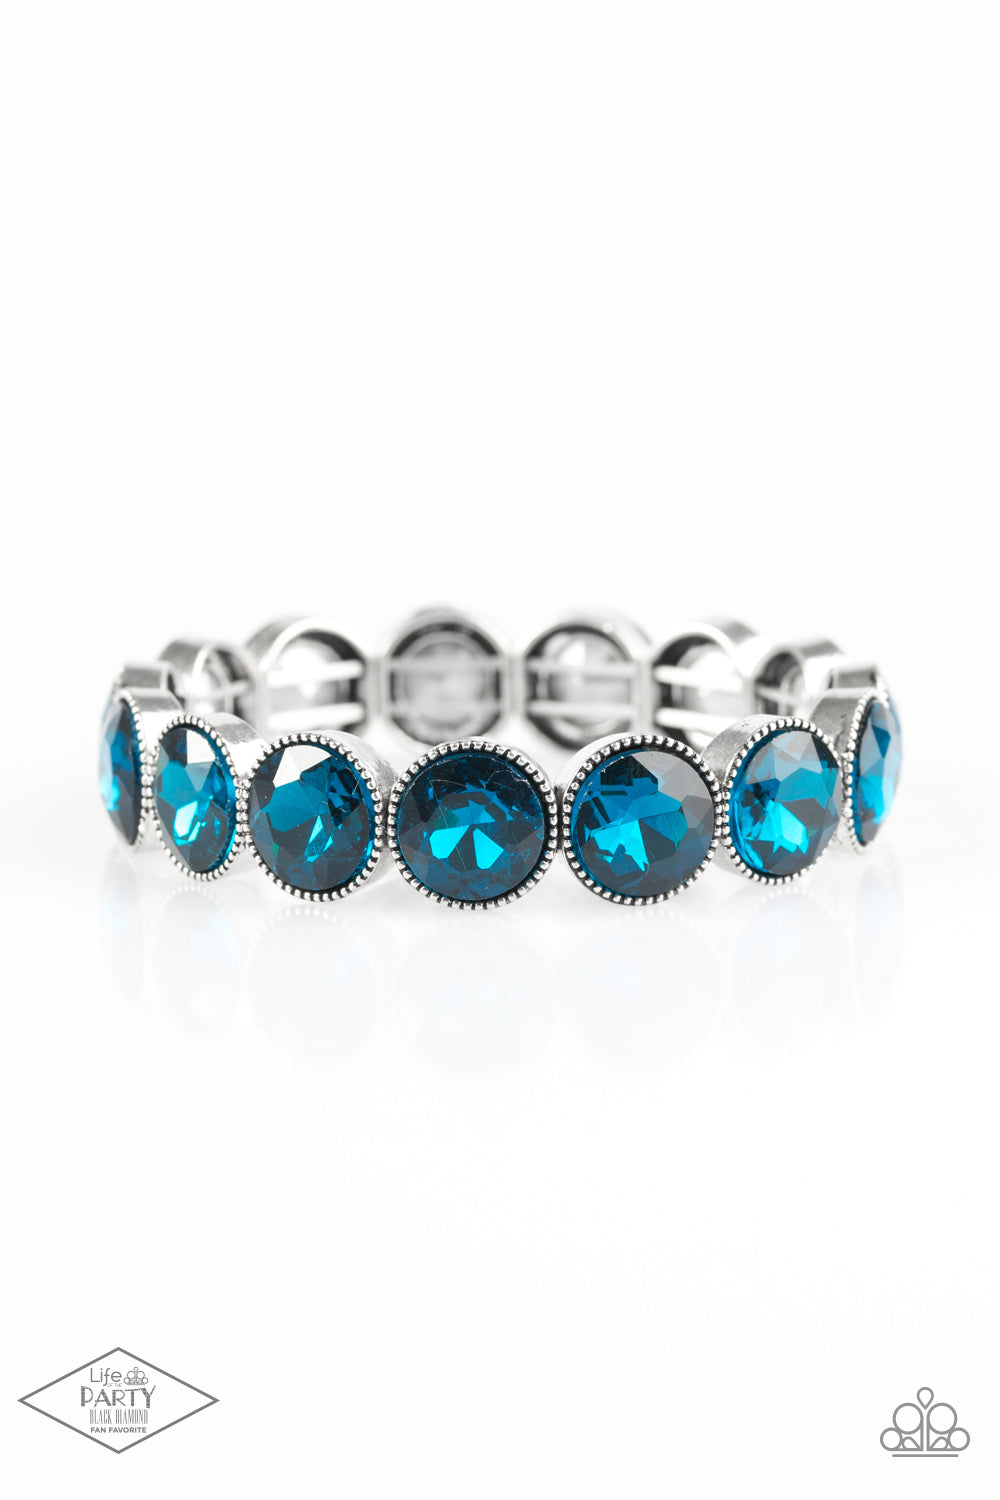 Bracelet, Sensitive Skin, Hypoallergenic Jewelry, blue, rhinestones, stretchy bracelet